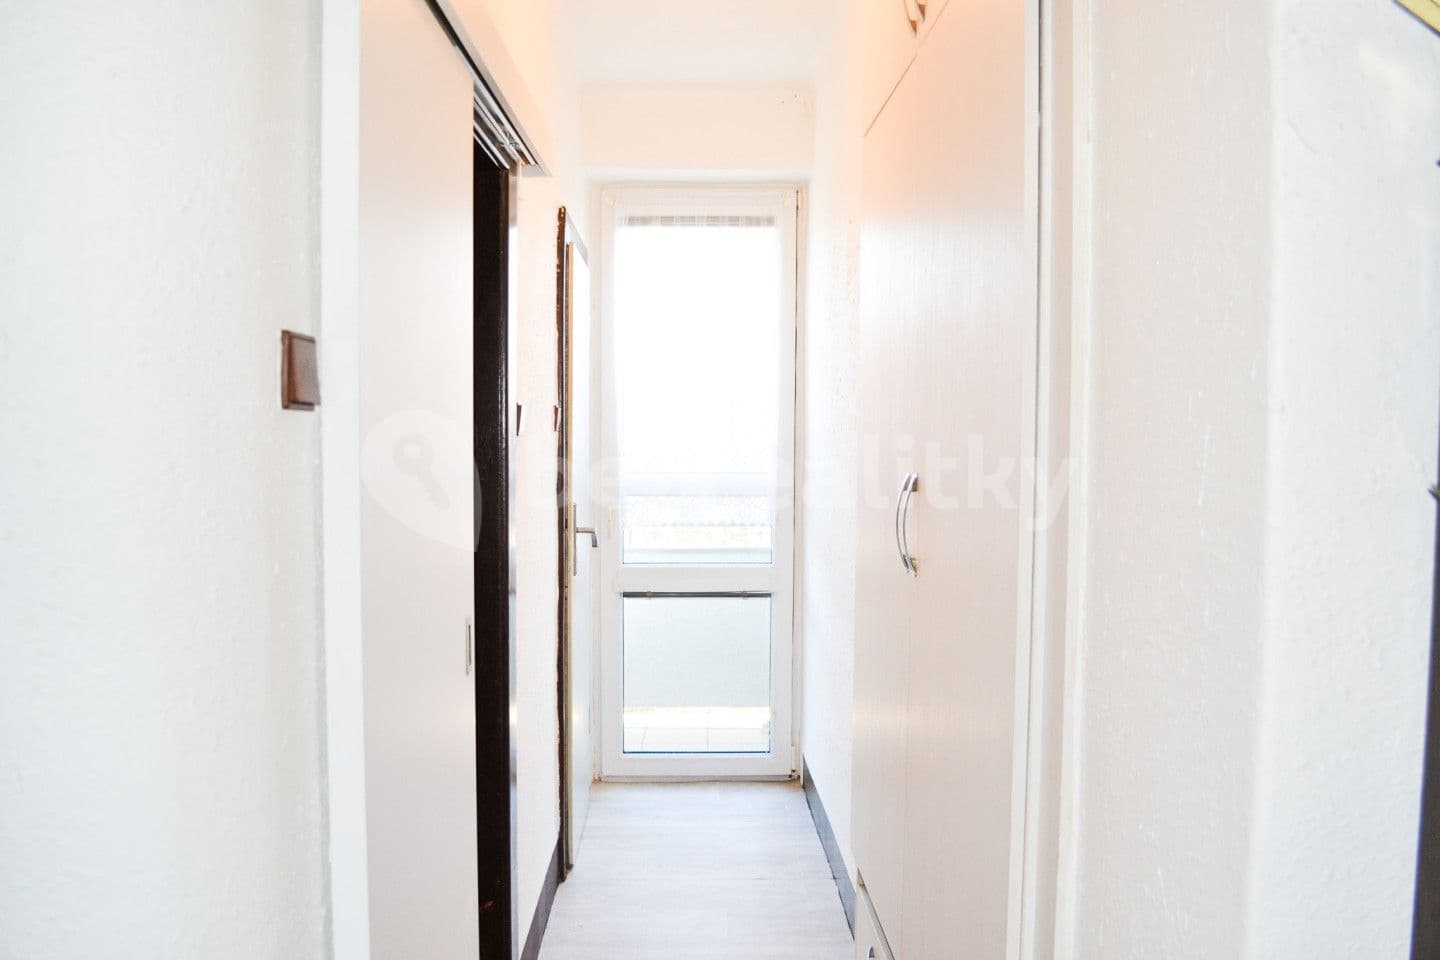 3 bedroom flat for sale, 79 m², Korejská, Ostrava, Moravskoslezský Region